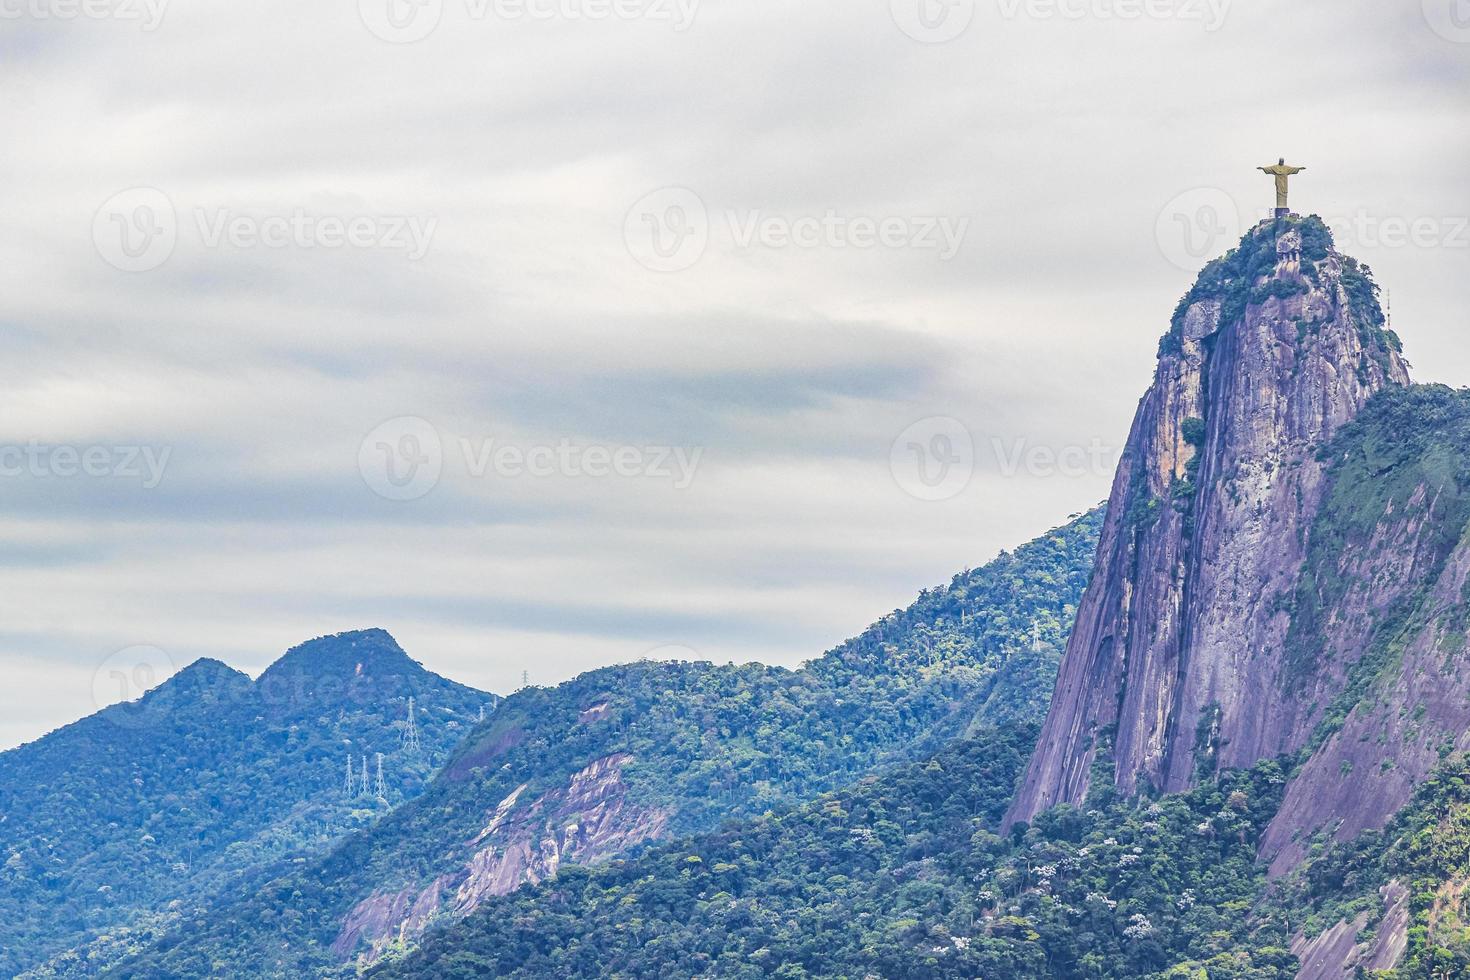 cristo redentor na montanha do corcovado rio de janeiro brasil. foto